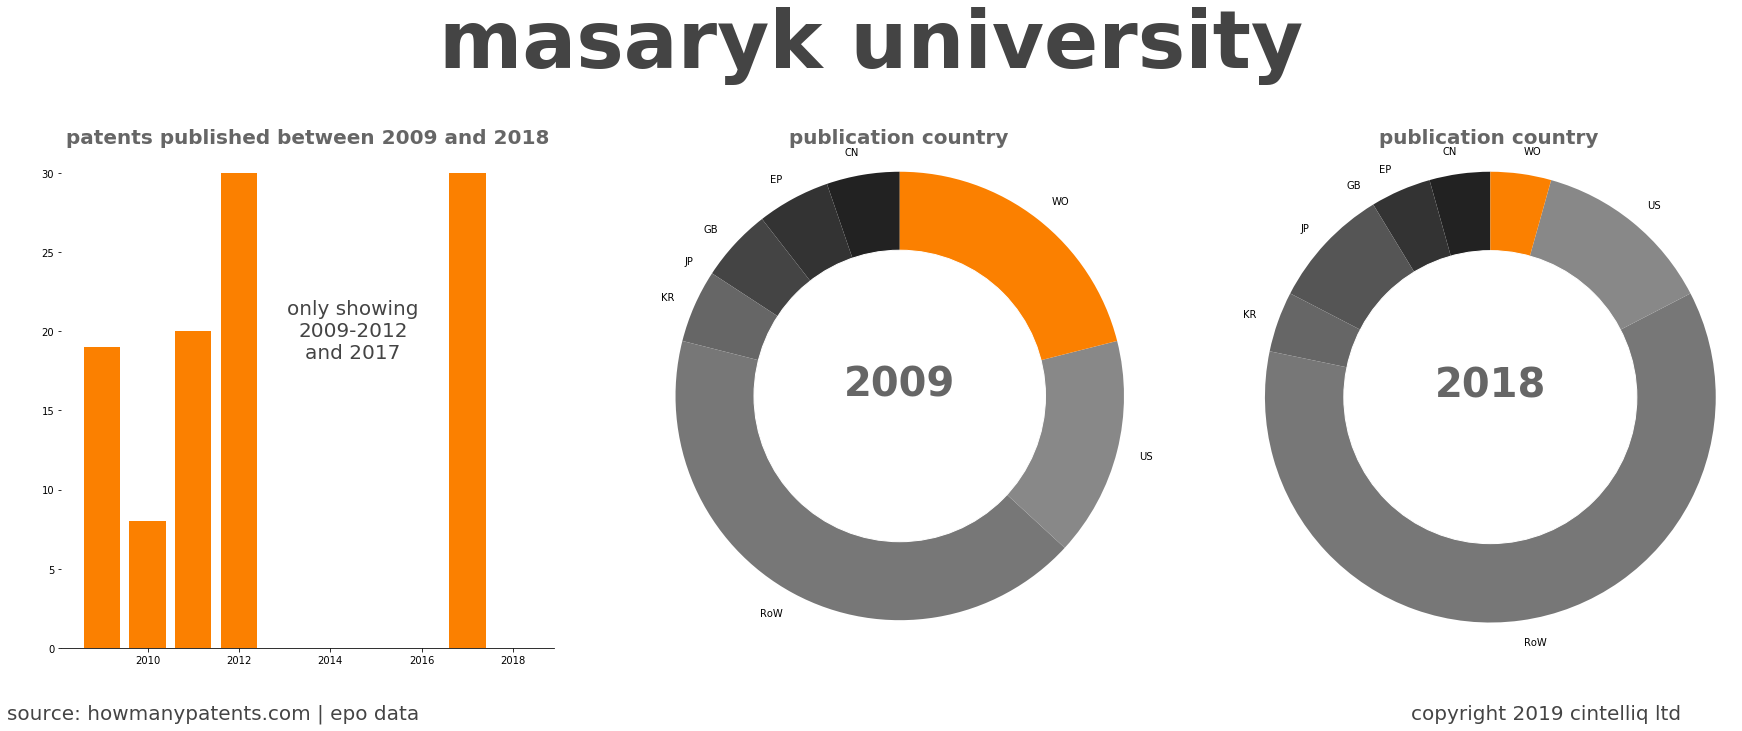 summary of patents for Masaryk University